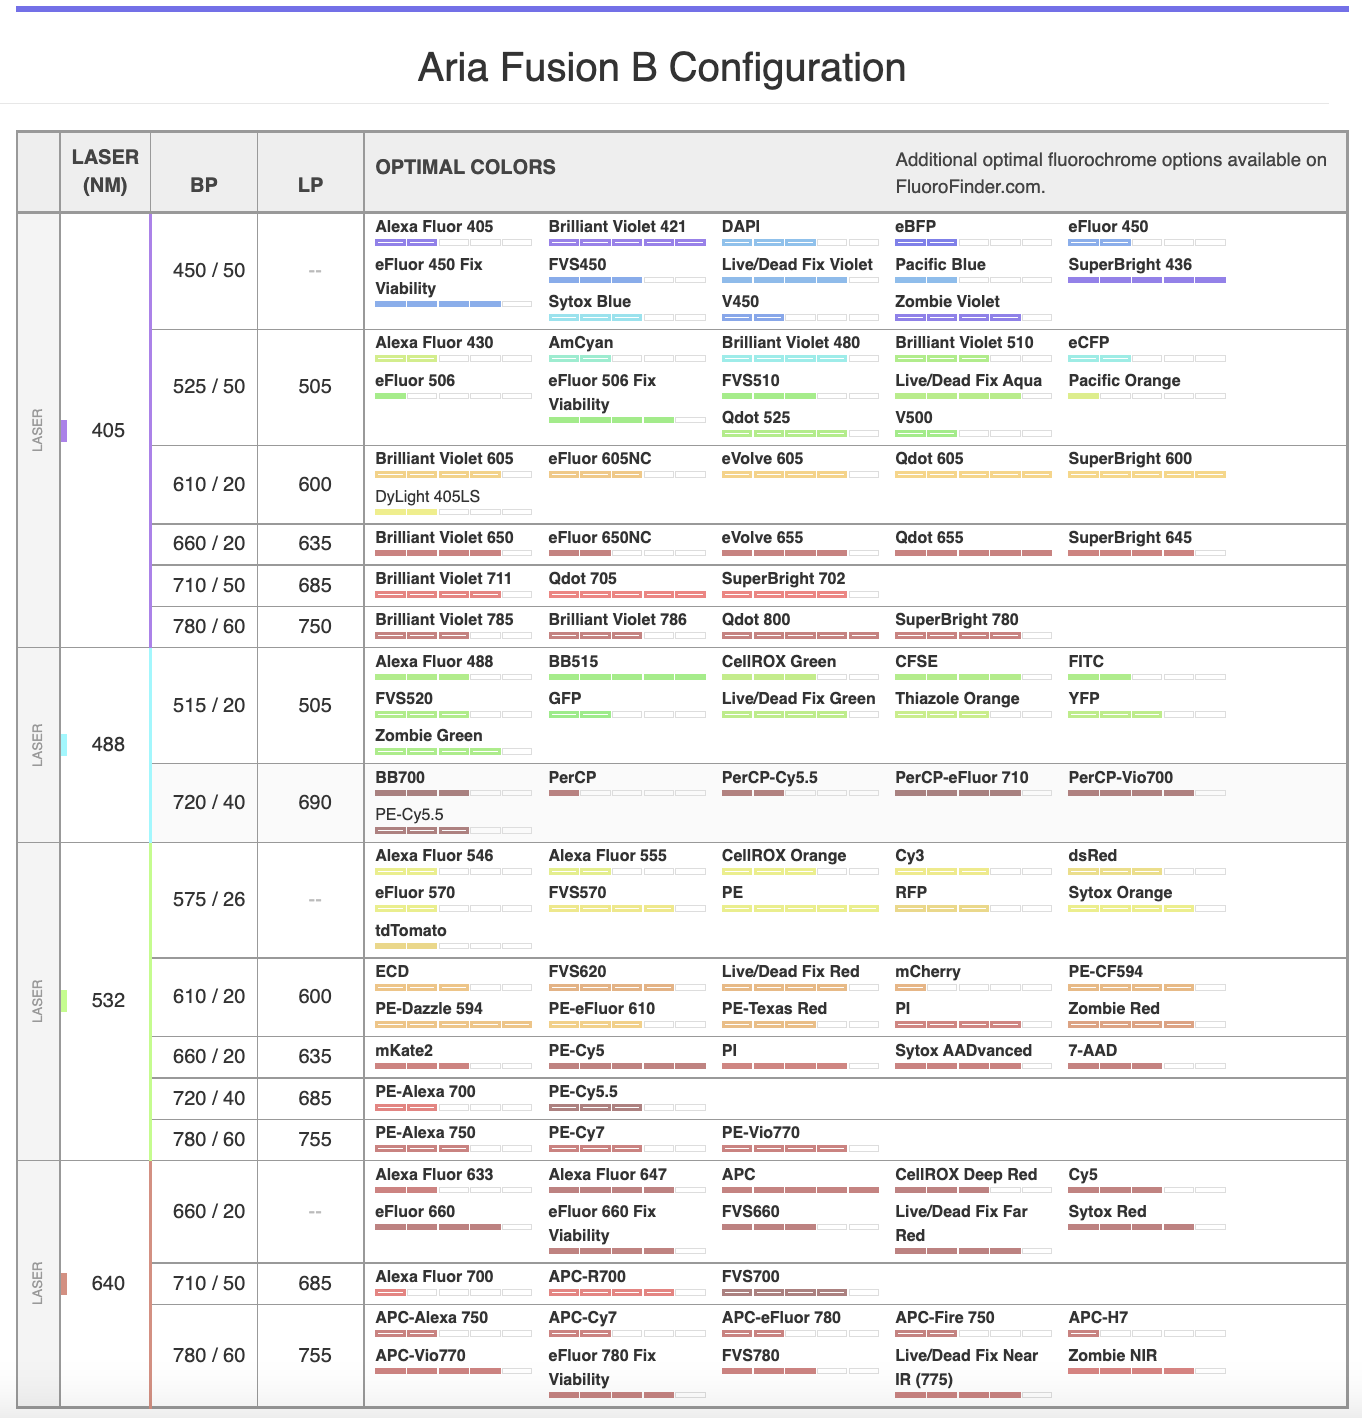 Advanced configuration for Aria Fusion B